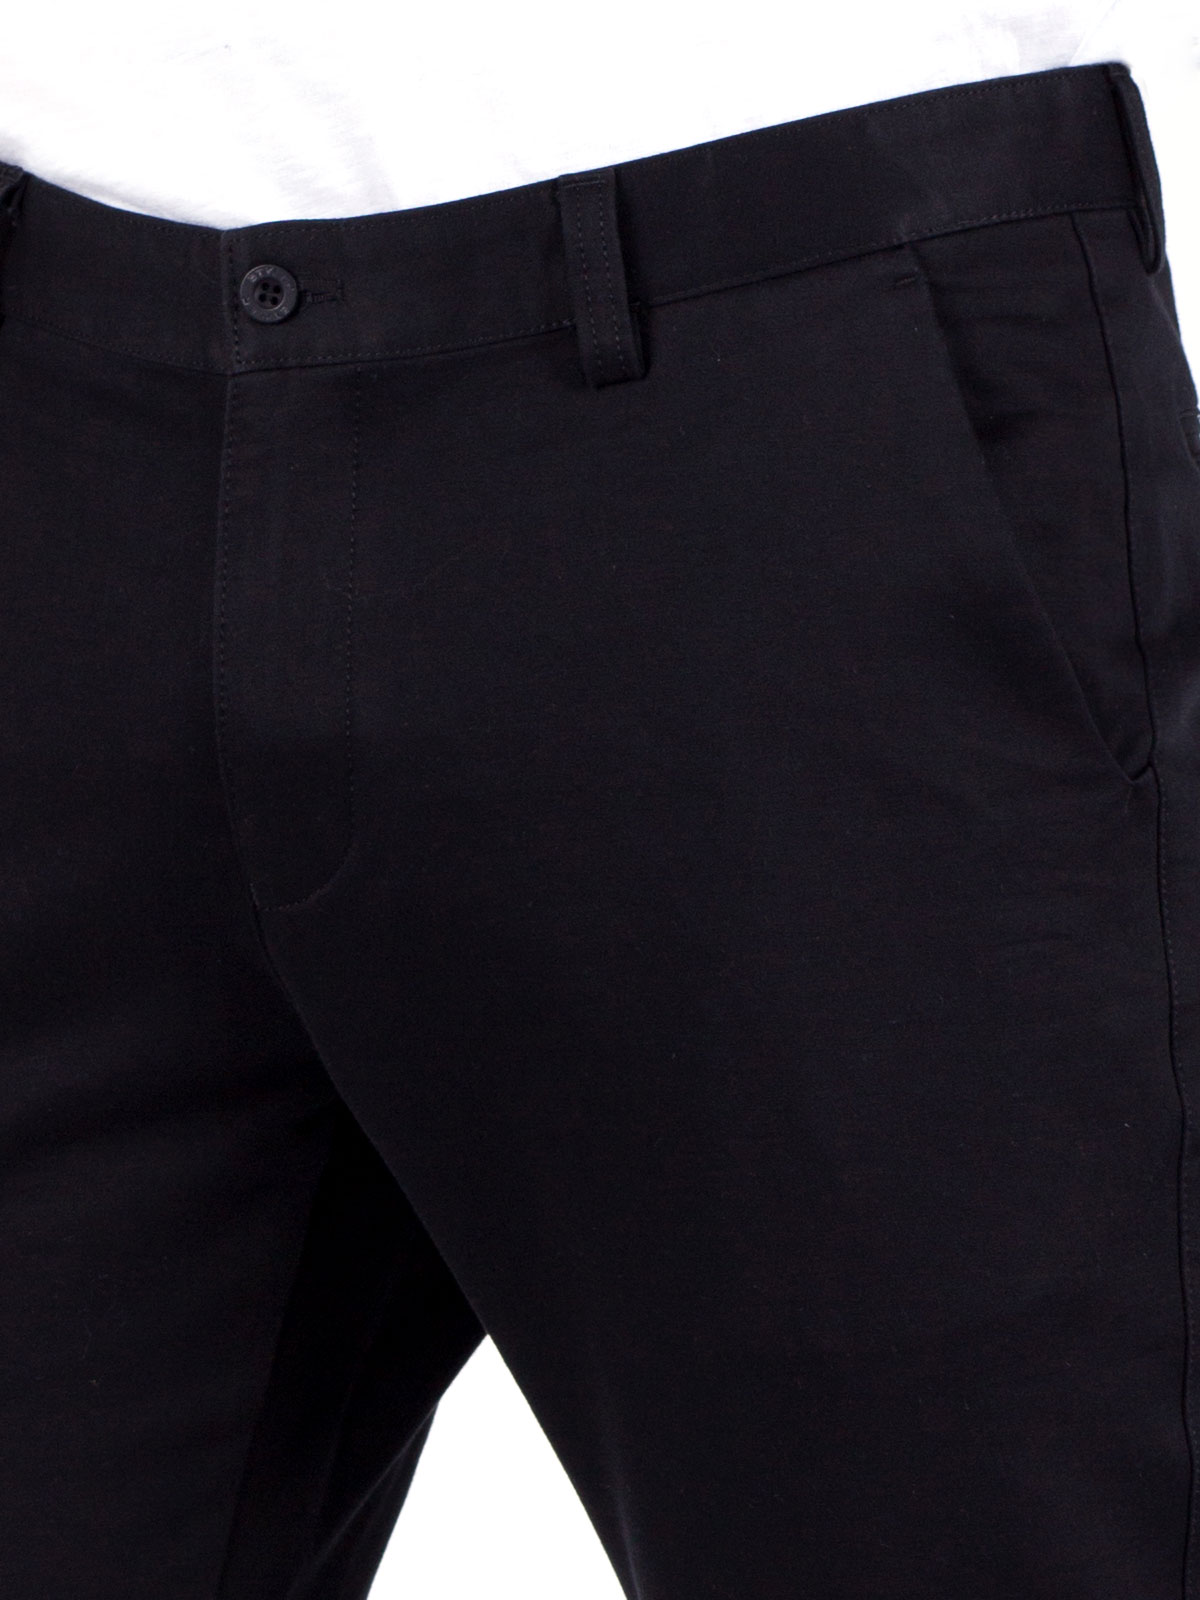 Black cotton pants with elastane - 60208 € 11.25 img3